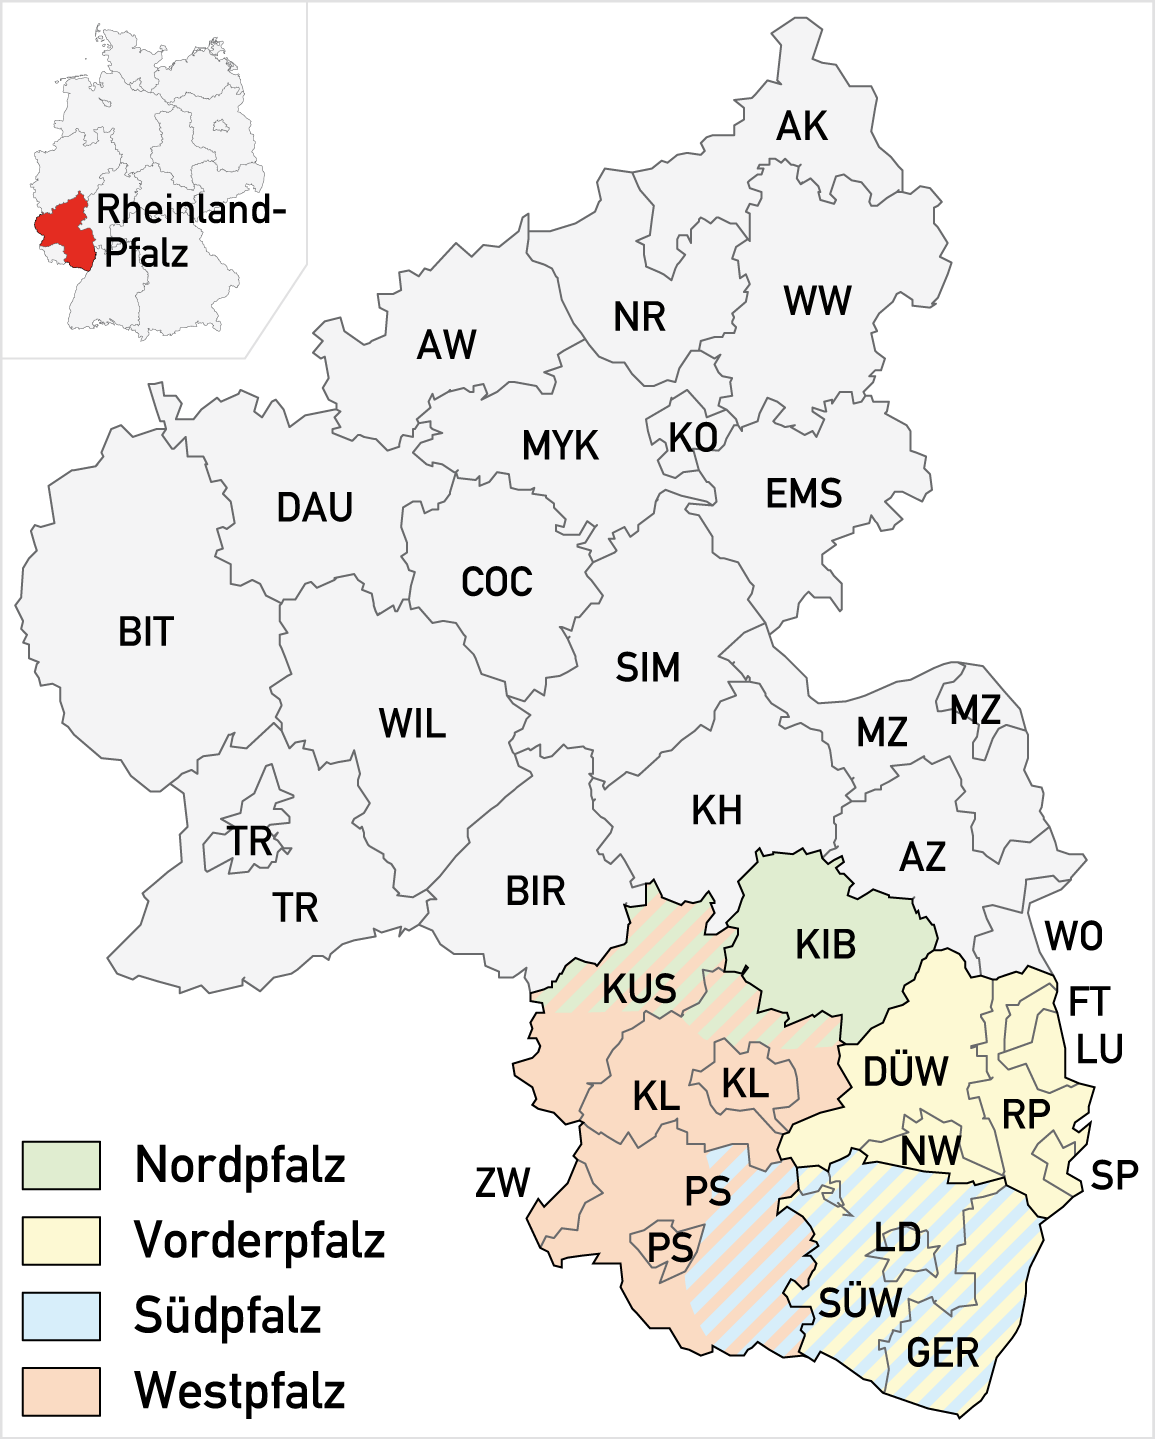 http://upload.wikimedia.org/wikipedia/commons/3/34/Teilbereiche_der_Pfalz.png